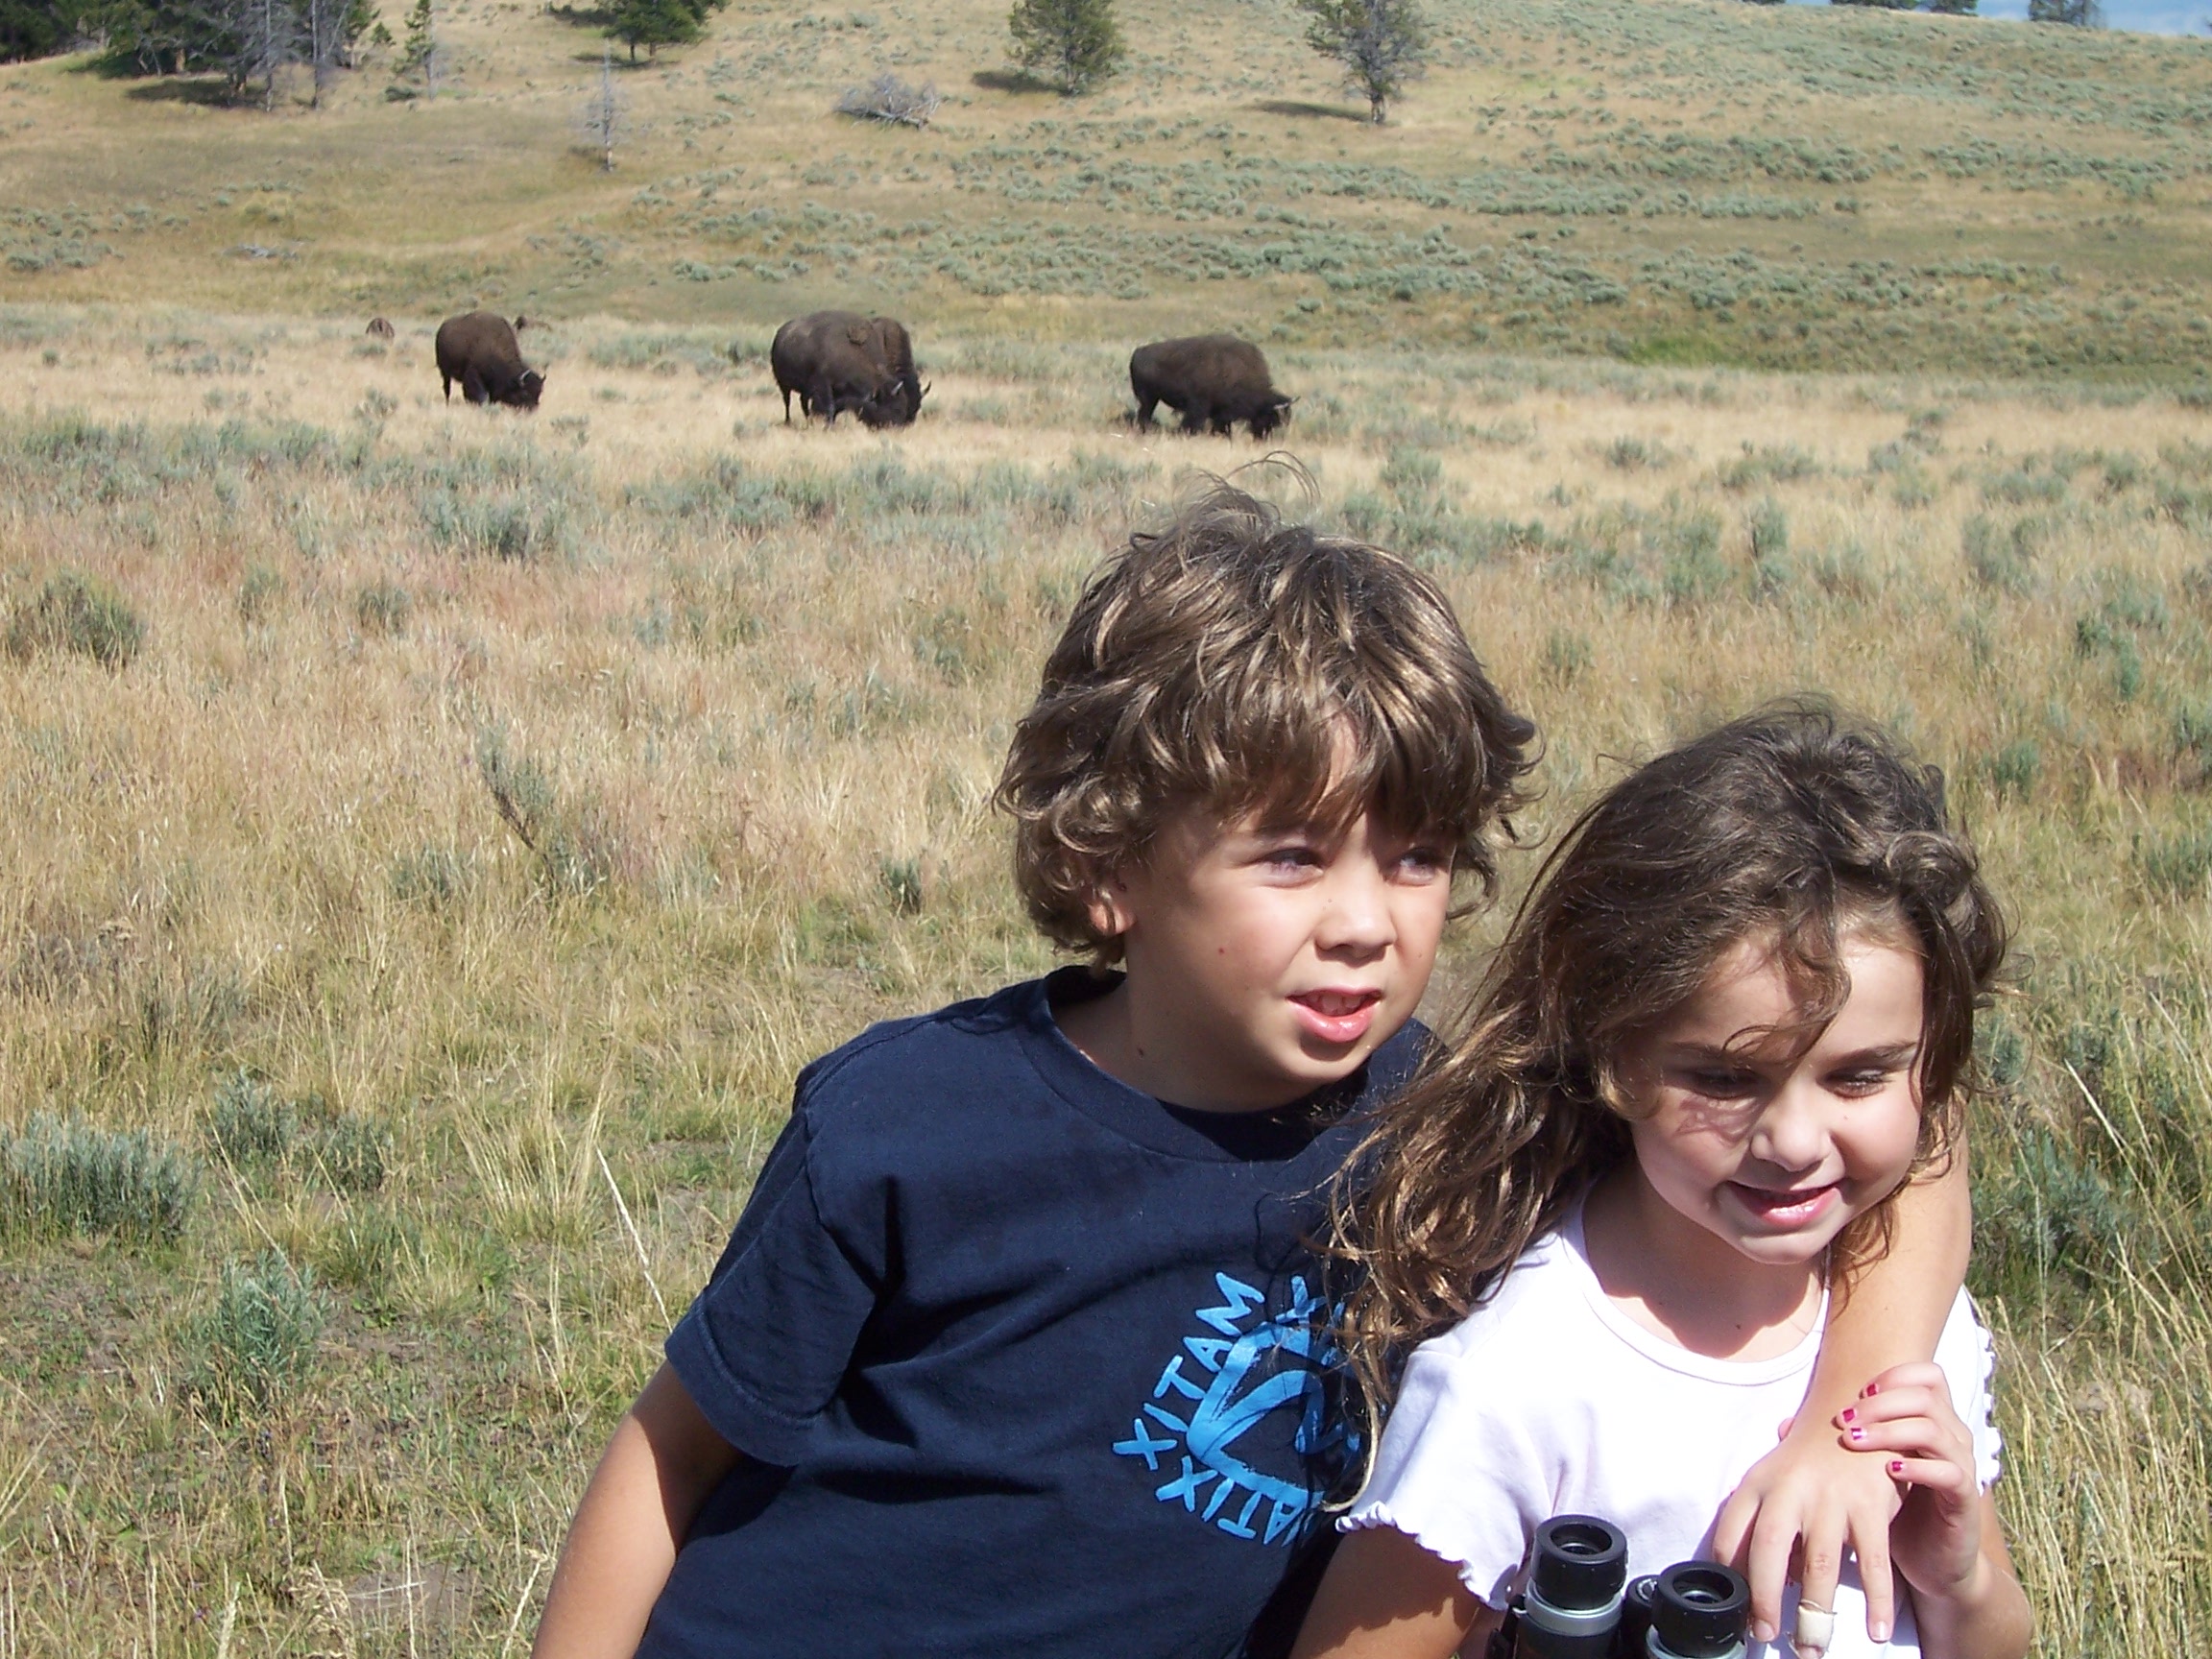 David and Rachel in front of Buffalos.